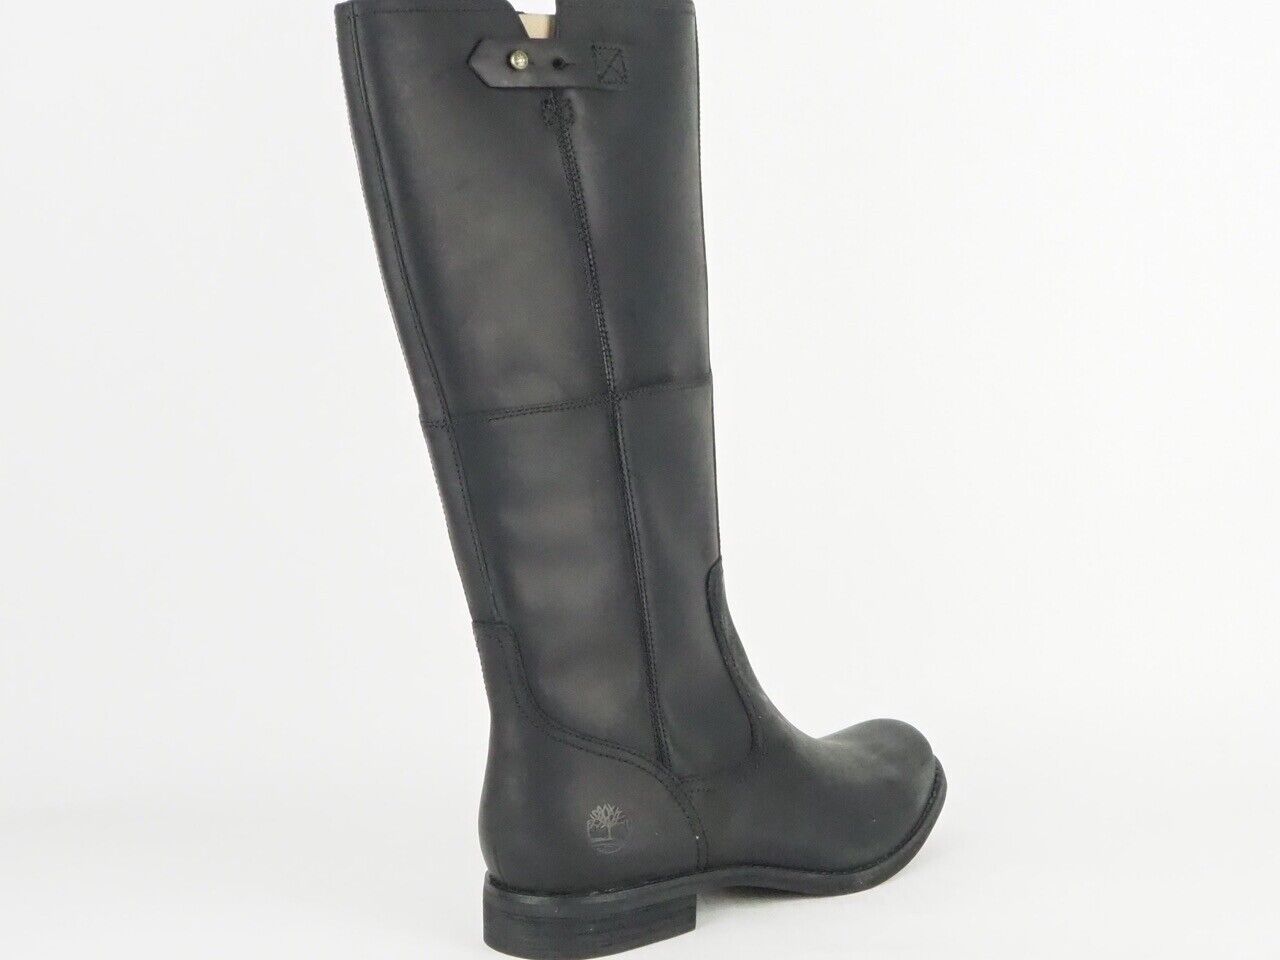 Womens Timberland EK Savin Hill Strap Tall 8756R Black Leather Zip Up Boots